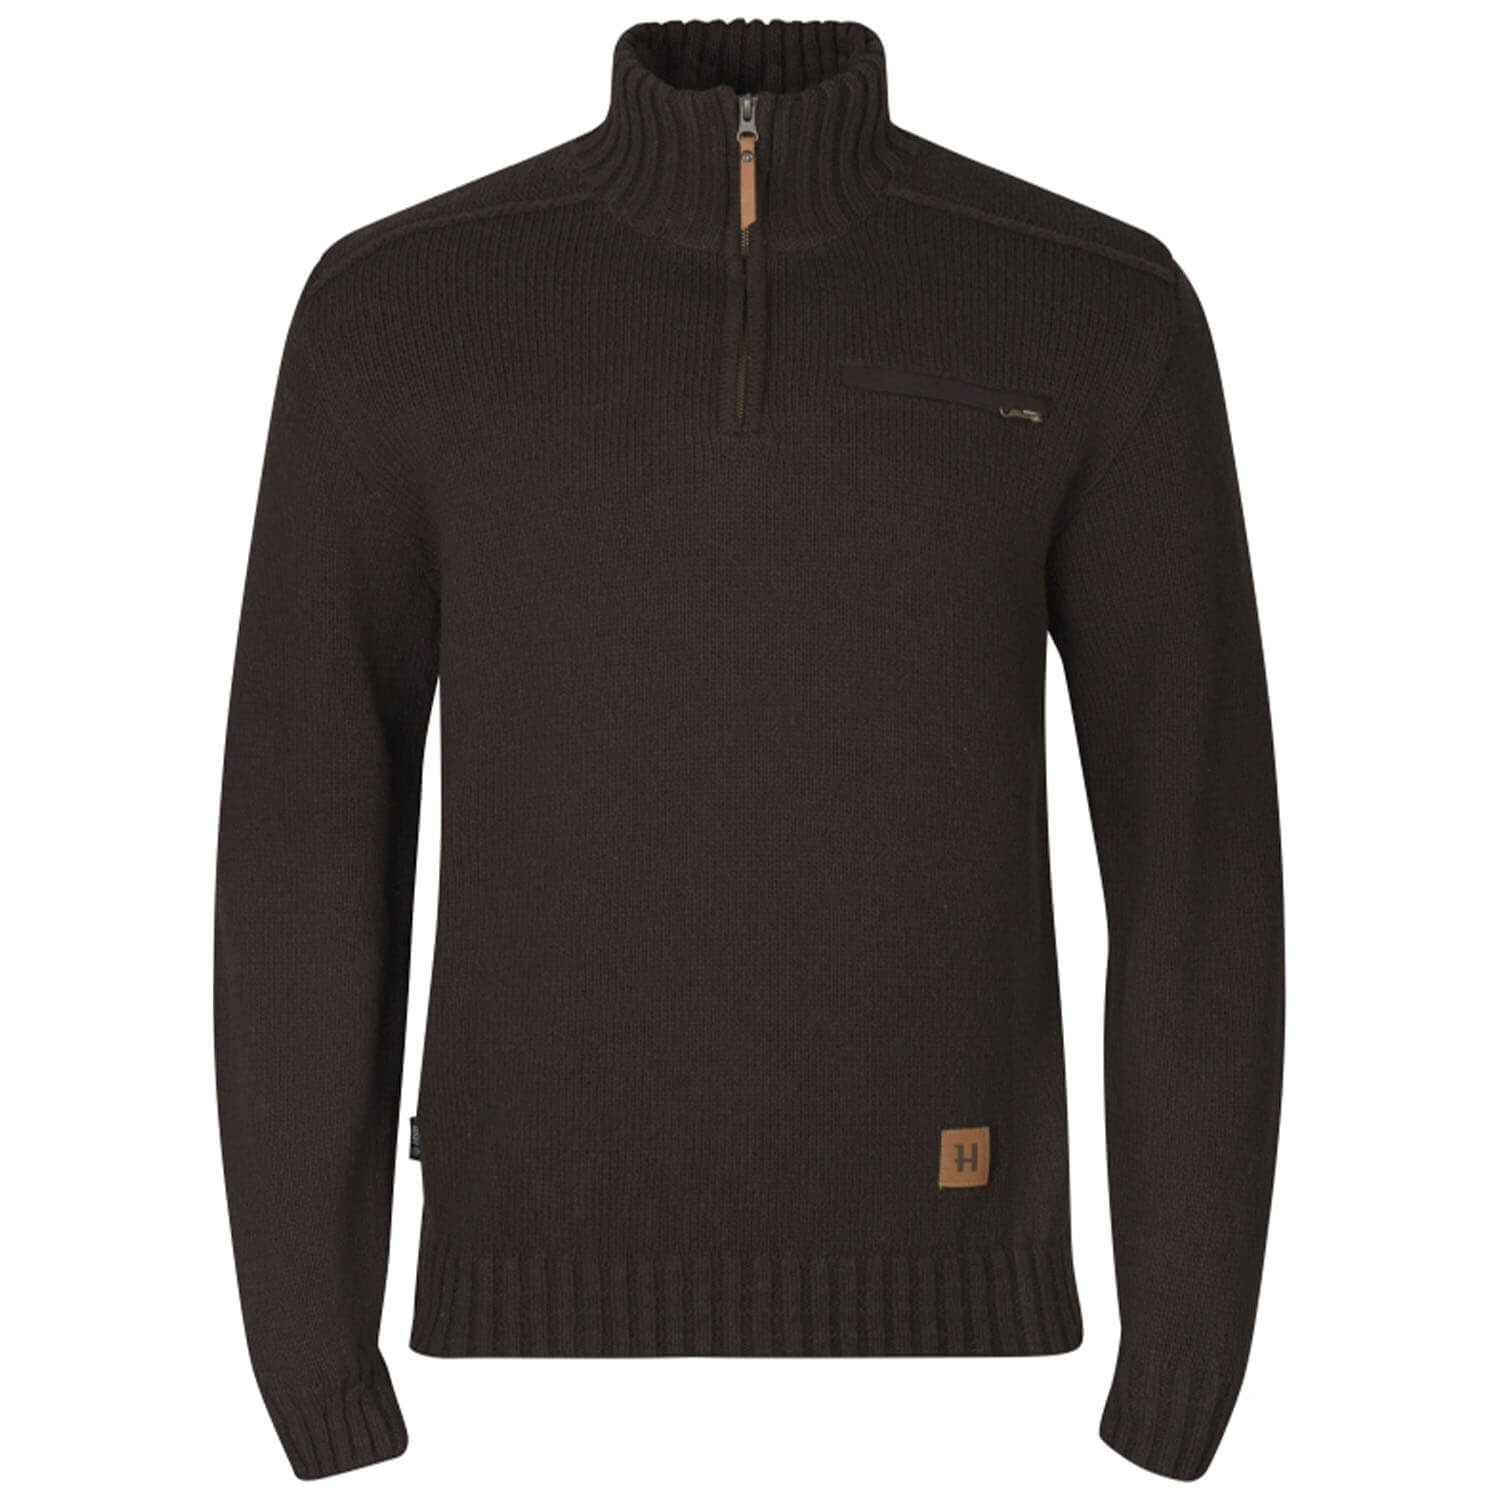 Härkila sweater annaboda 2.0 HSP (demitasse brown) - Men's Hunting Clothing